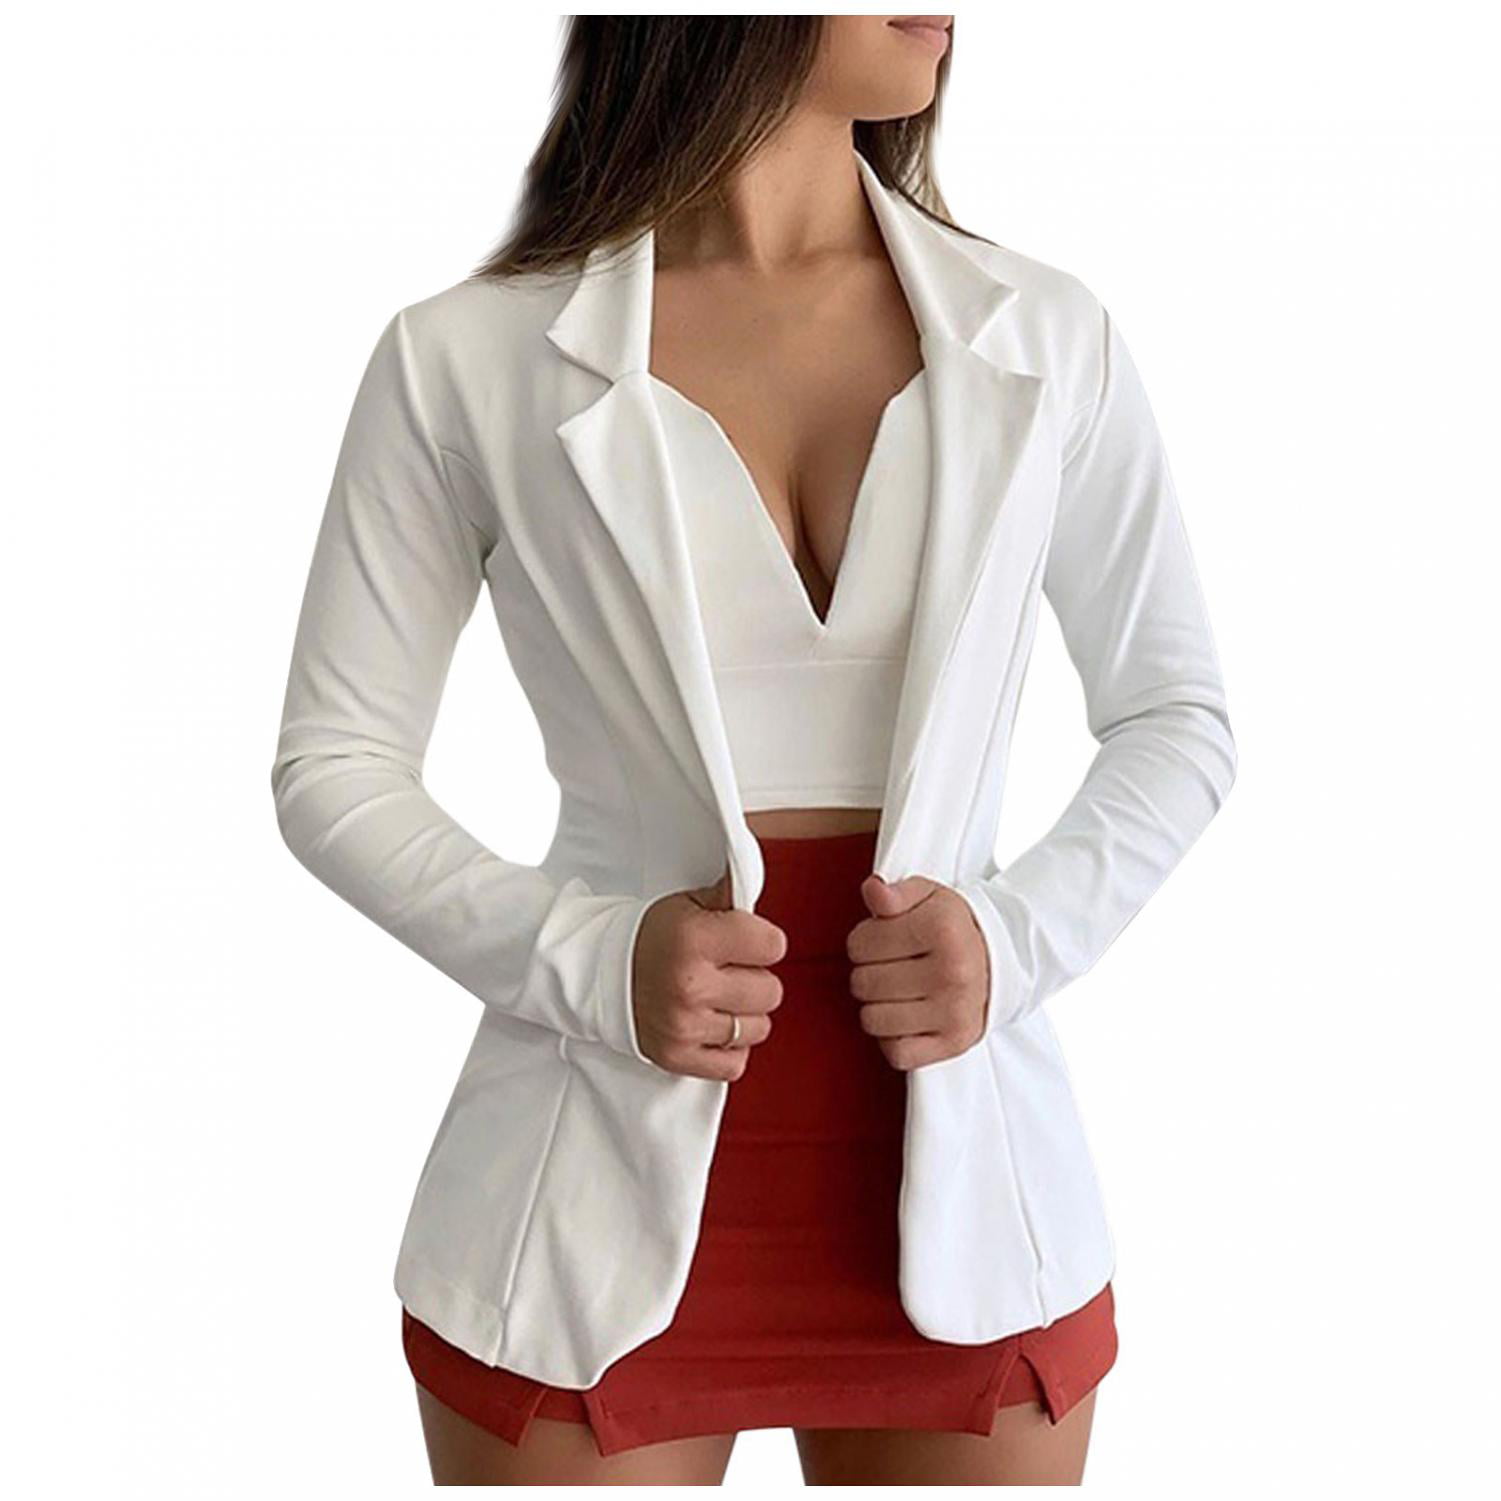 Wirziis Women's Lightweight Jackets Long-Sleeve Full-Zip Business Attire Fall Short Cardigan Suit Coat Top for Legging